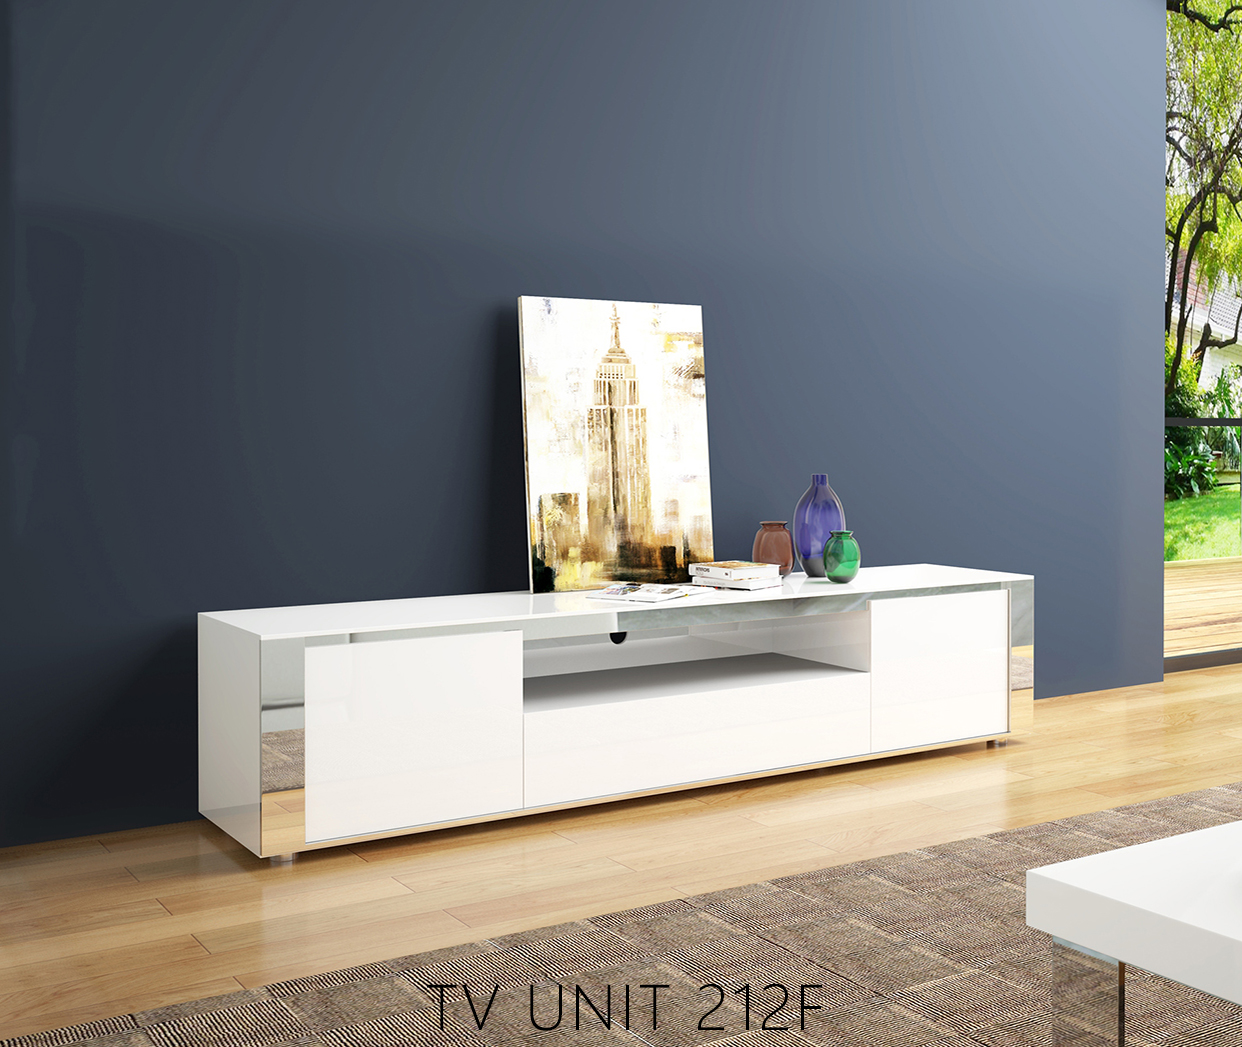 TV UNIT 212F